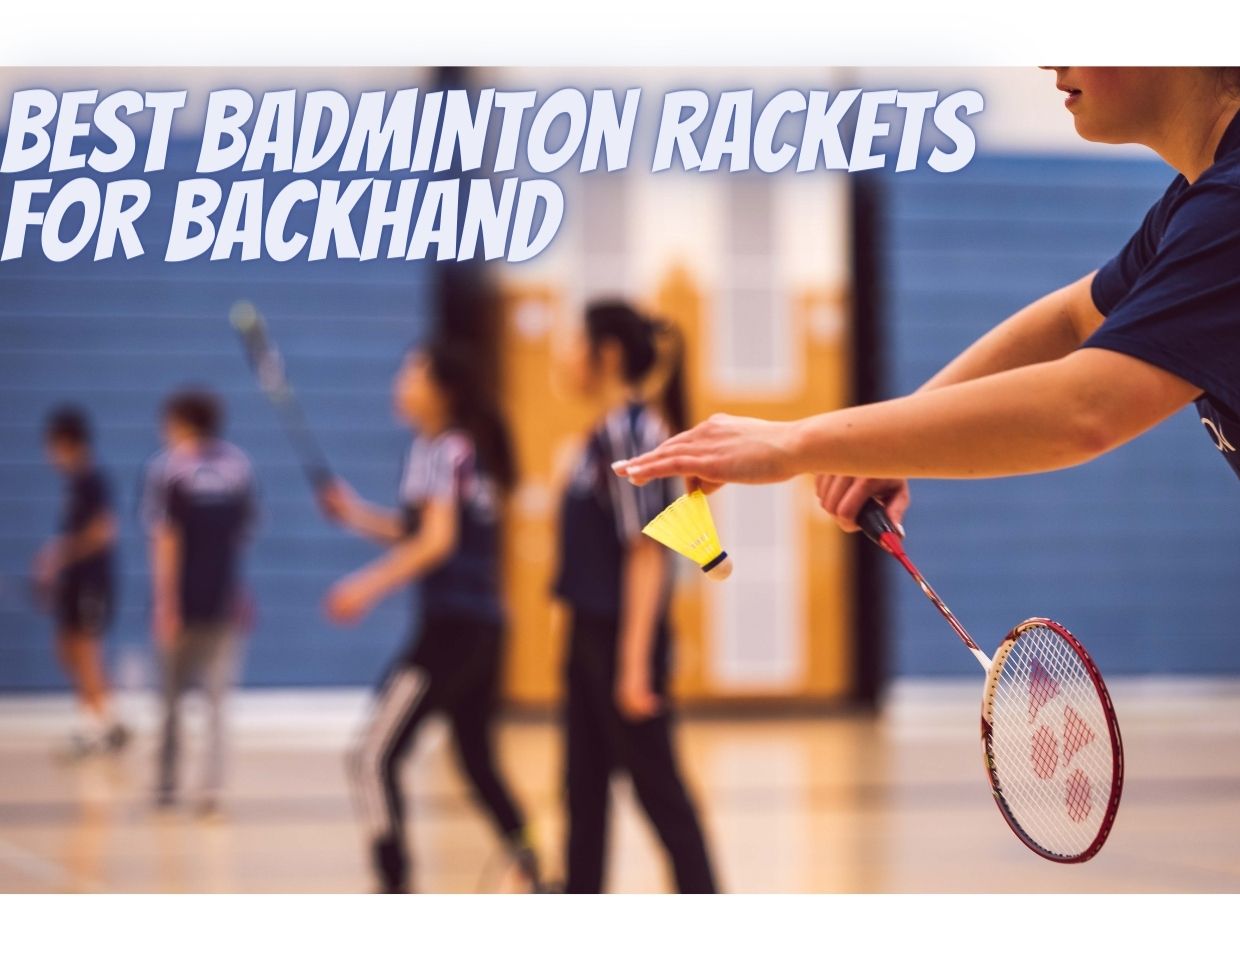 Best Badminton Rackets for Backhand